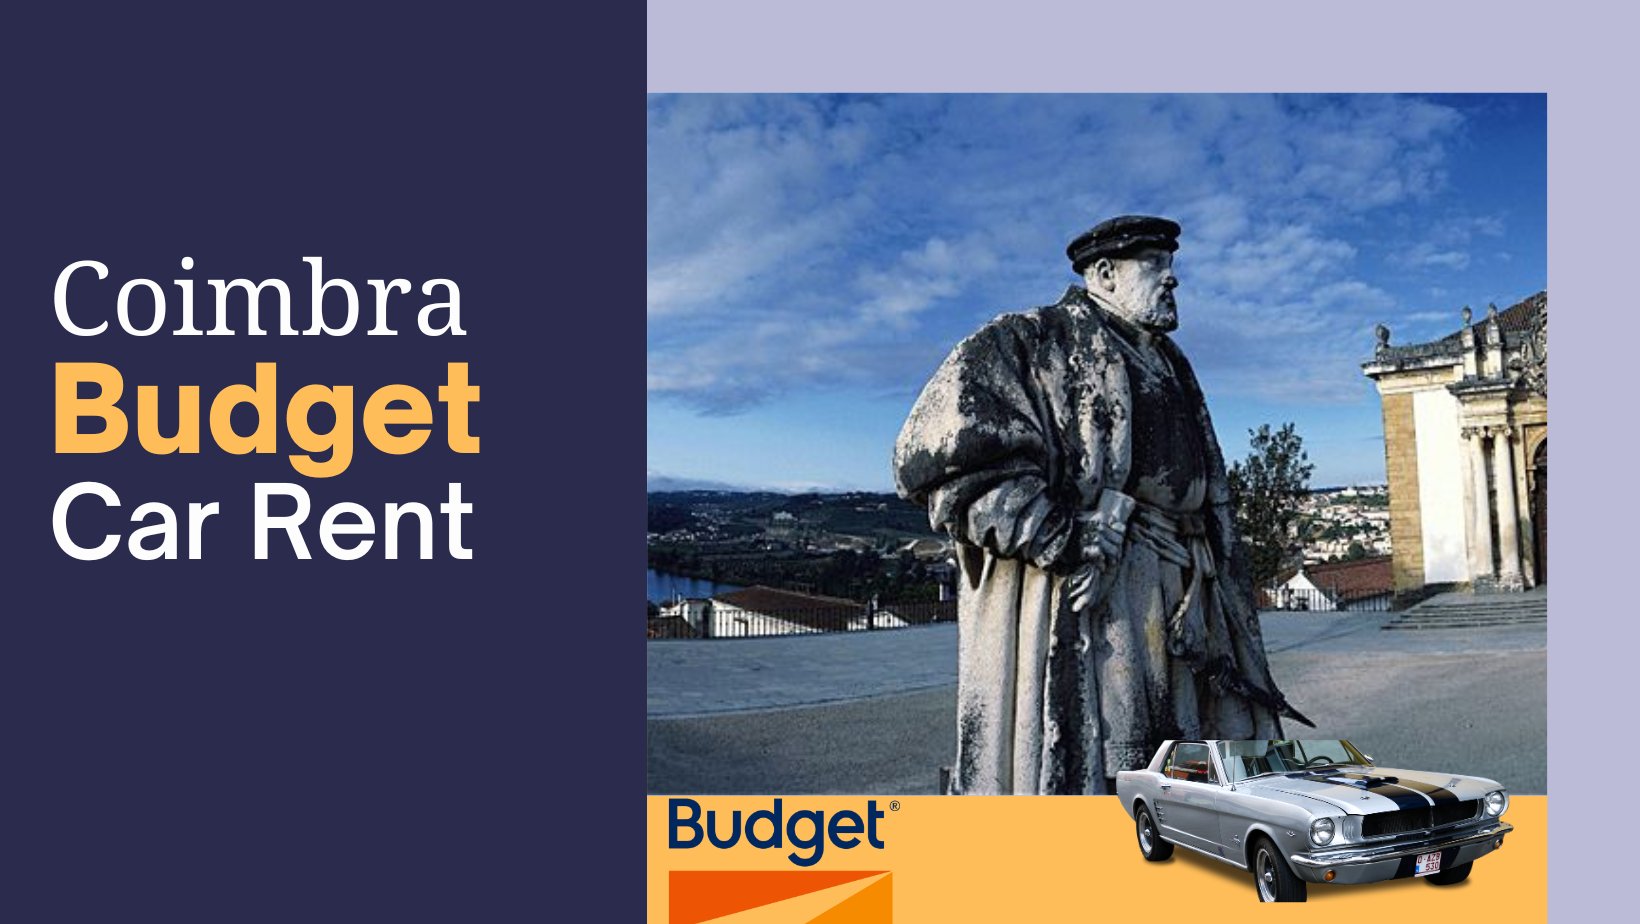 Budget Coimbra